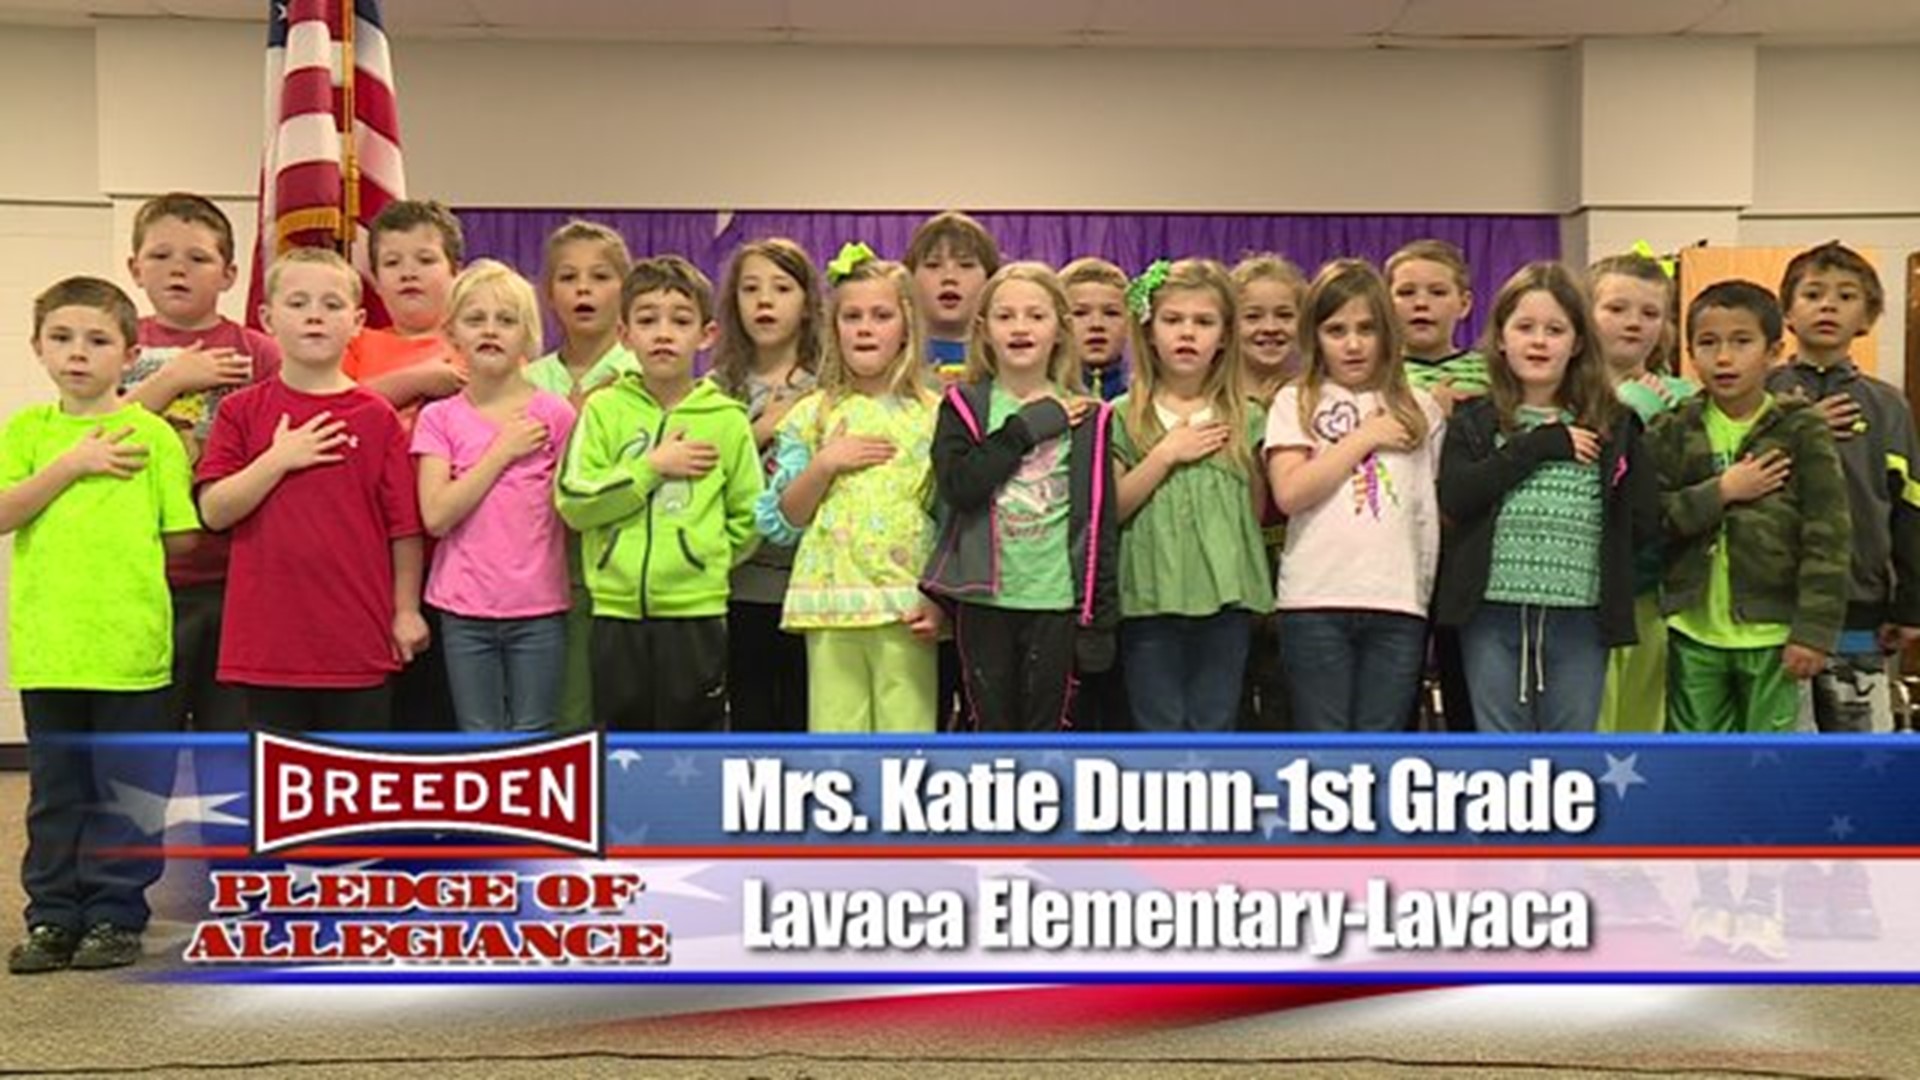 Lavaca Elementary, Lavaca - Mrs. Katie Dunn - 1st Grade